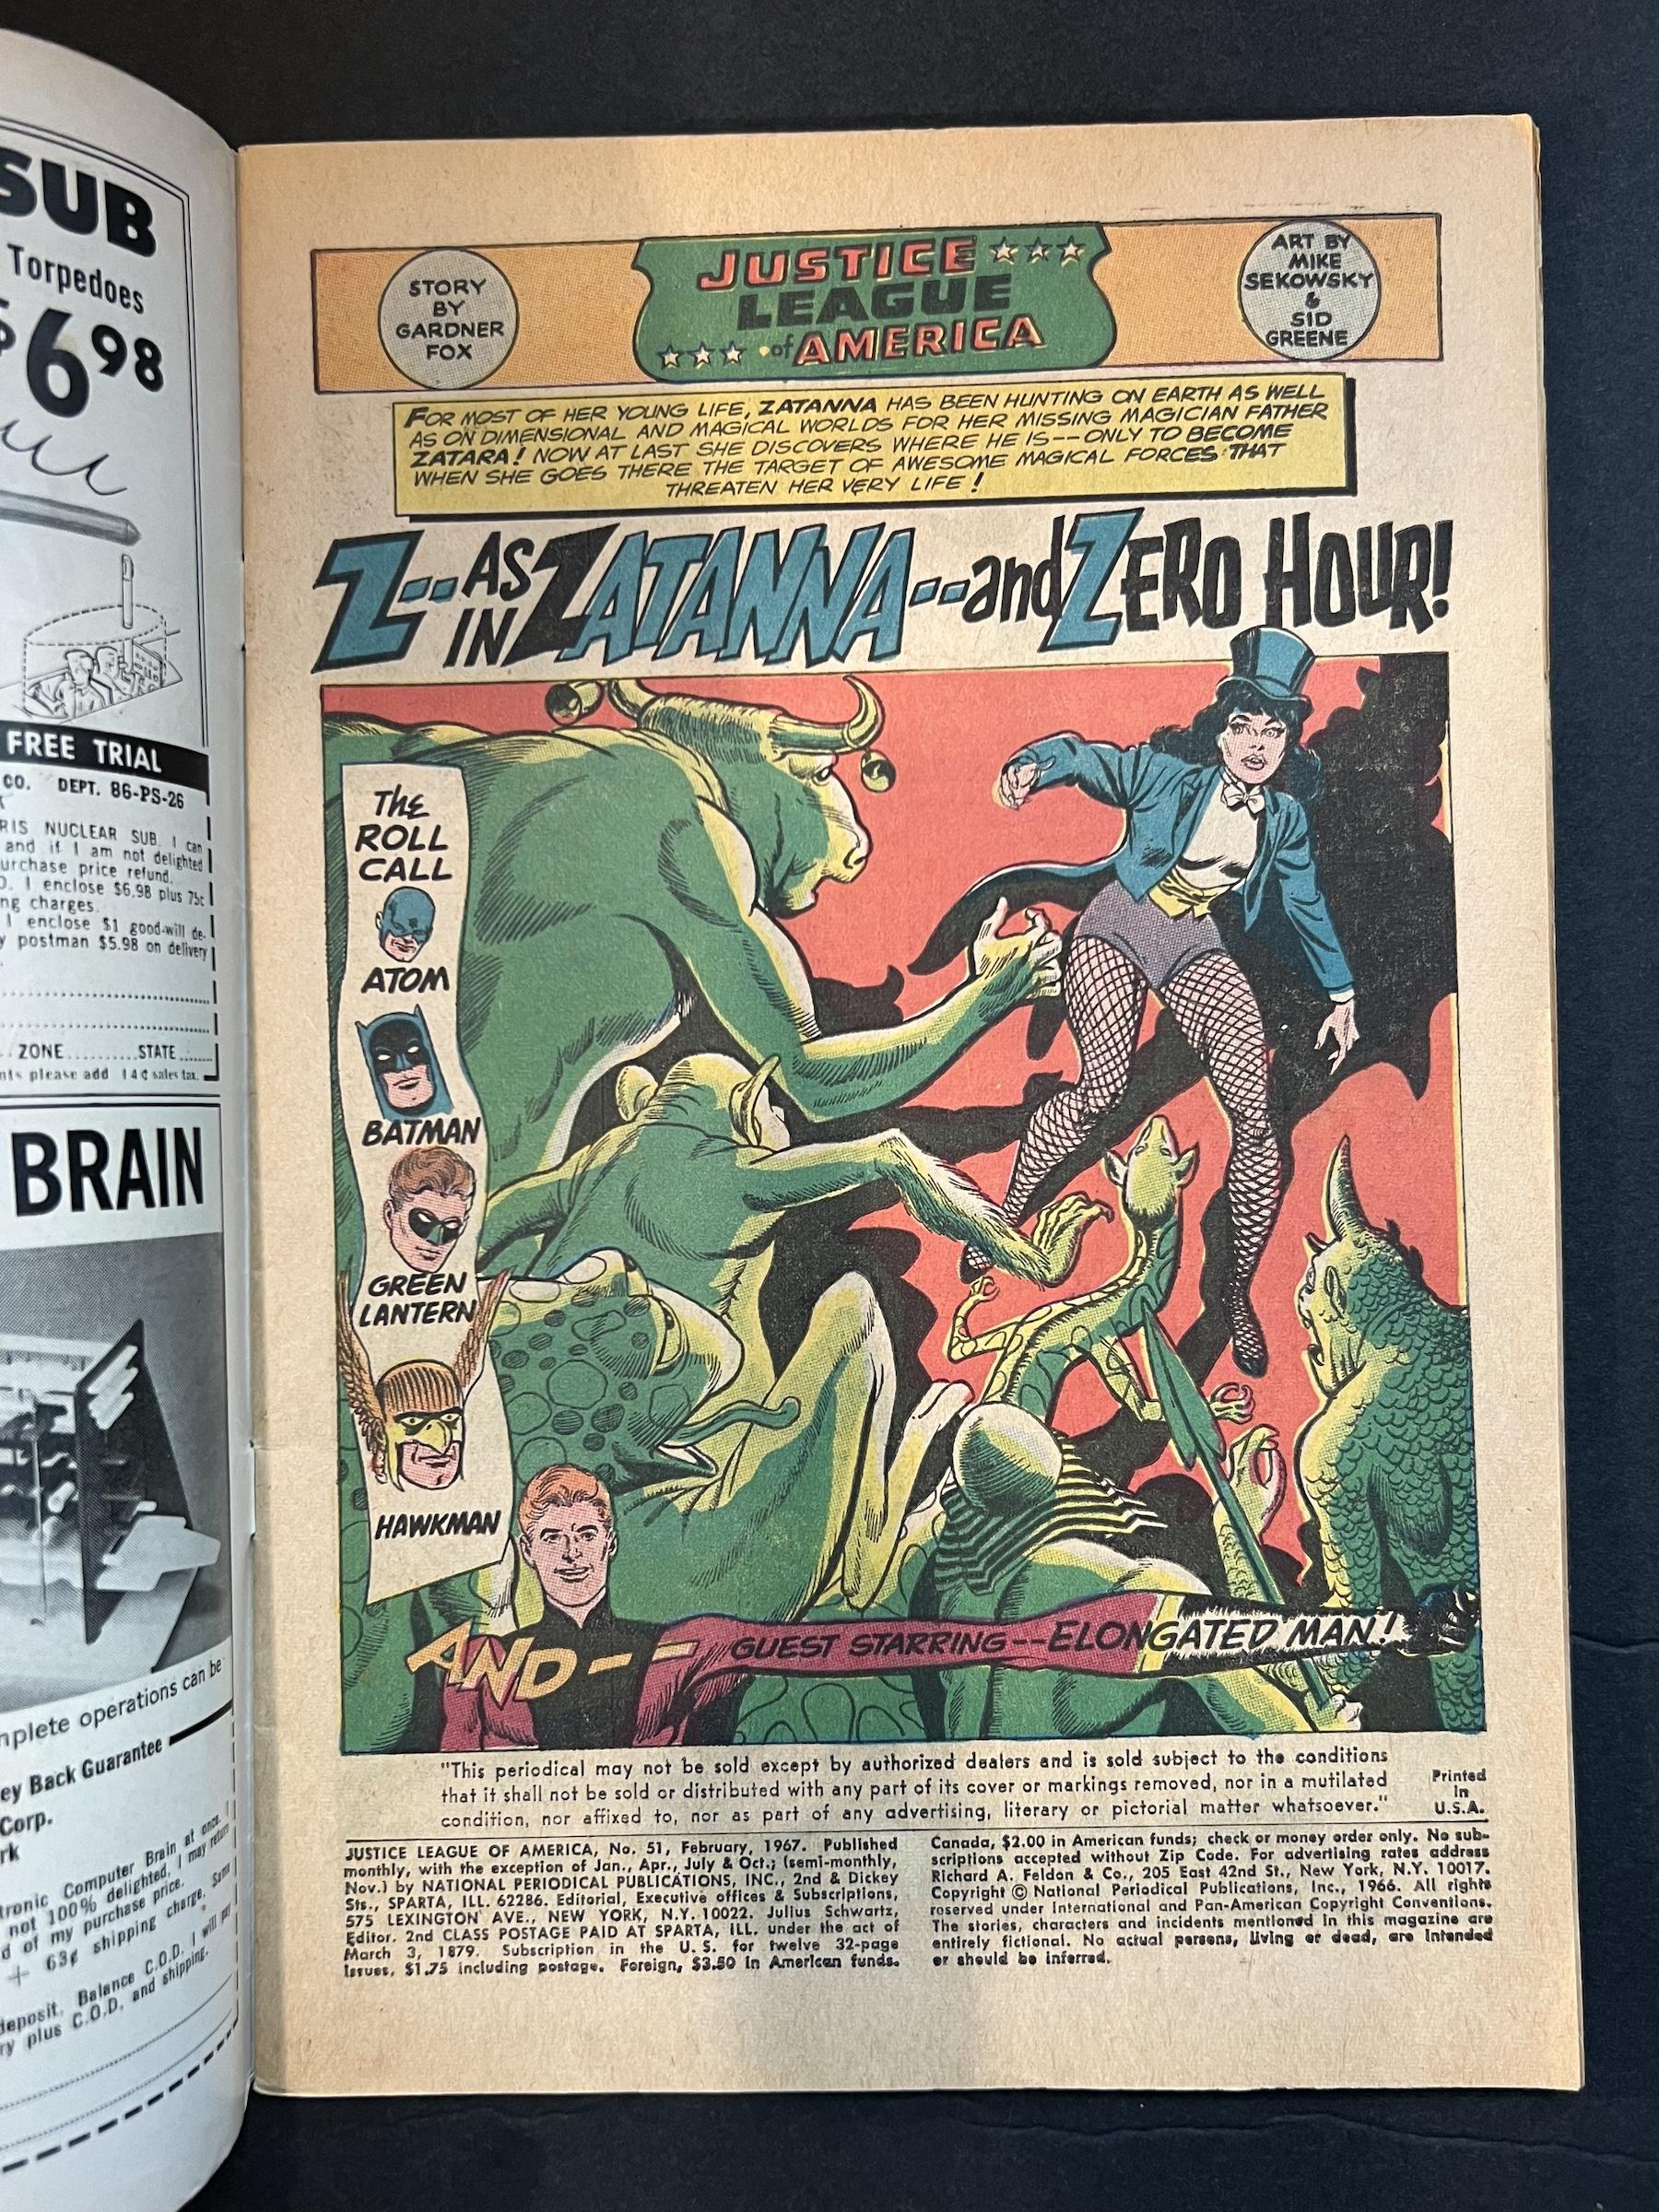 Justice League of America #51 DC 1st App Allura 1967 Comic Book